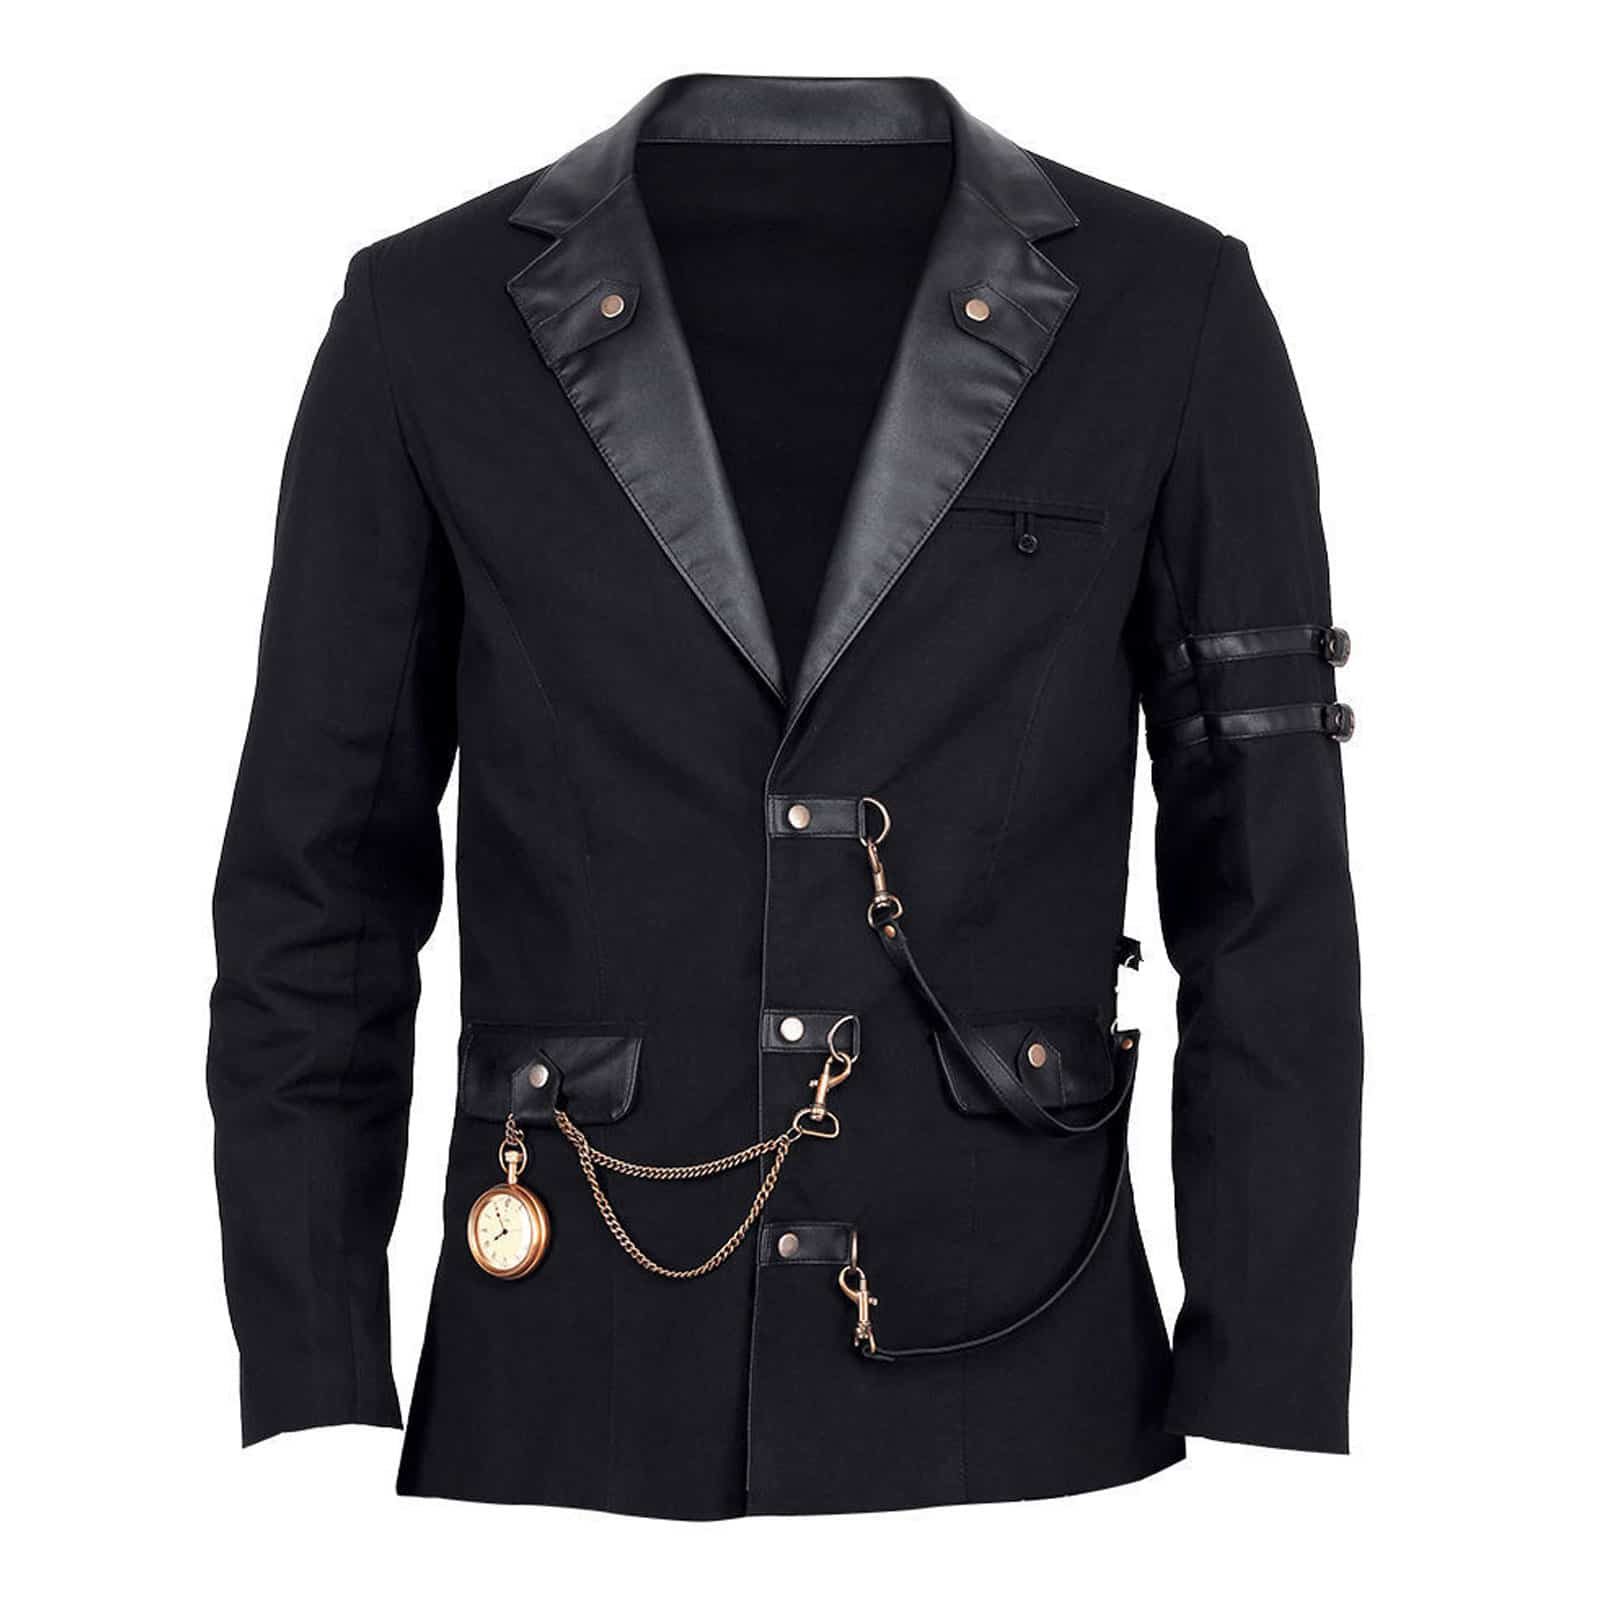 Jacke Herren schwarz Gothic black jacket, Vintage Jackets for Men, Gothic Jackets for Man